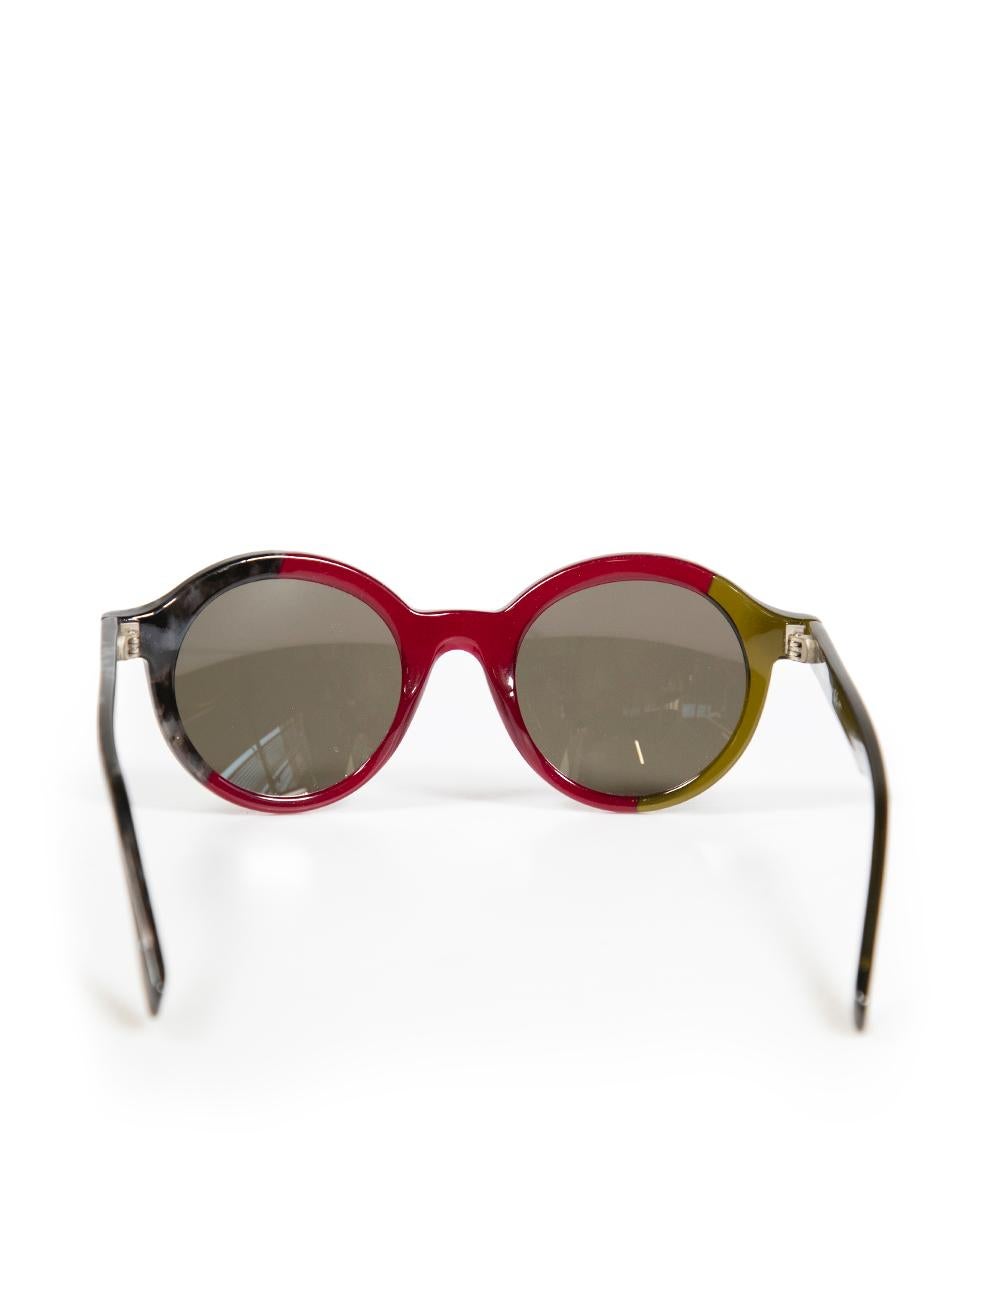 Fendi Round Cline Havana Sunglasses In Good Condition For Sale In London, GB